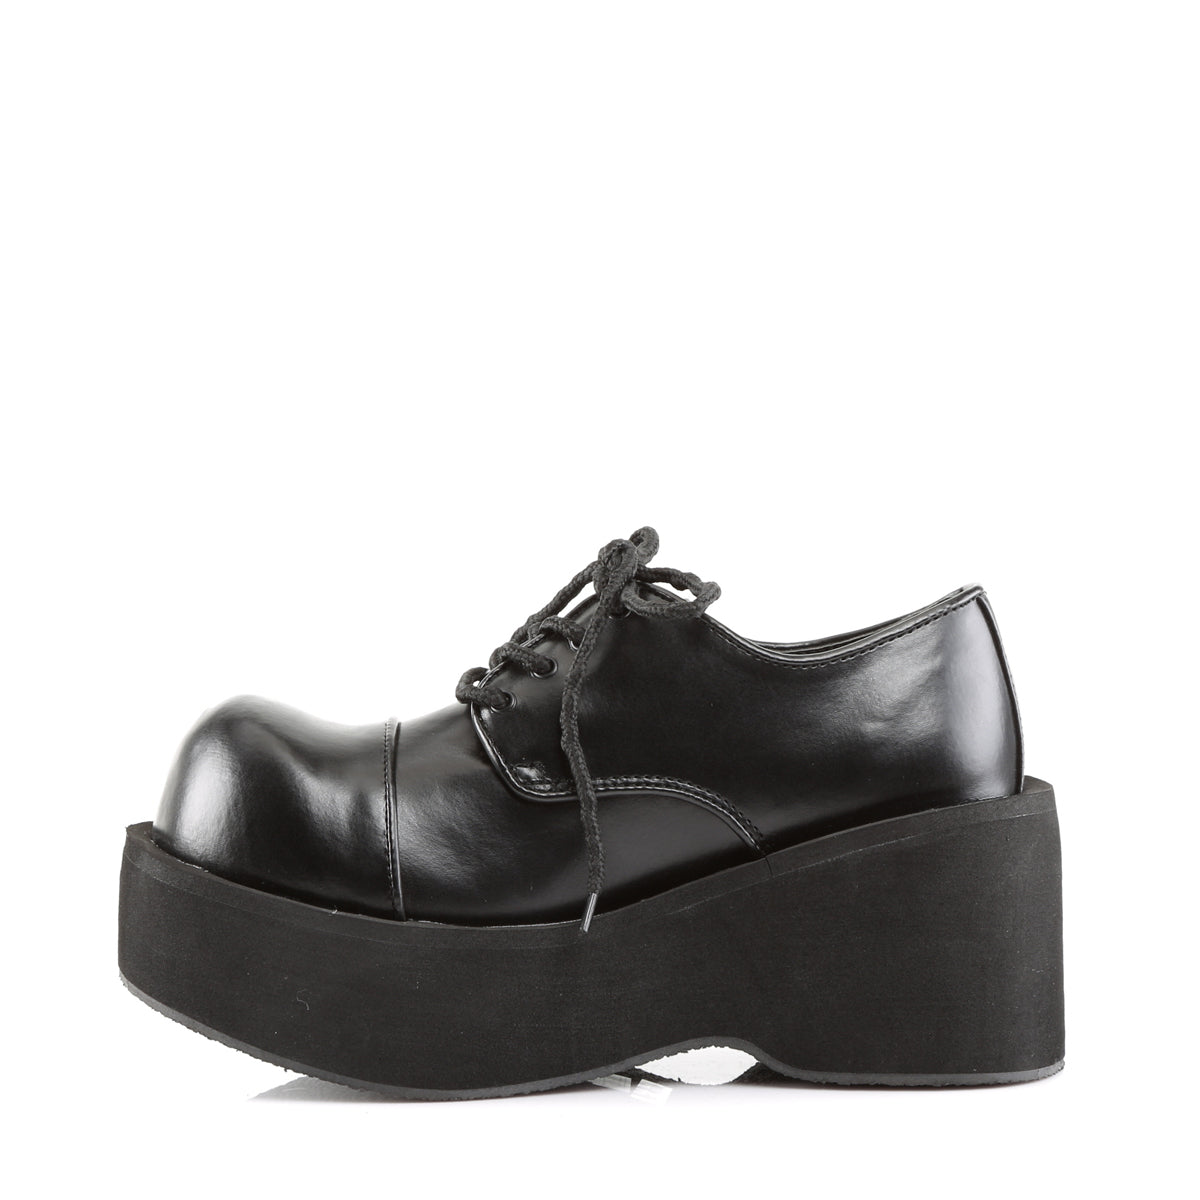 DANK-101 Demonia Black Vegan Leather Women's Heels & Platform Shoes [Demonia Cult Alternative Footwear]